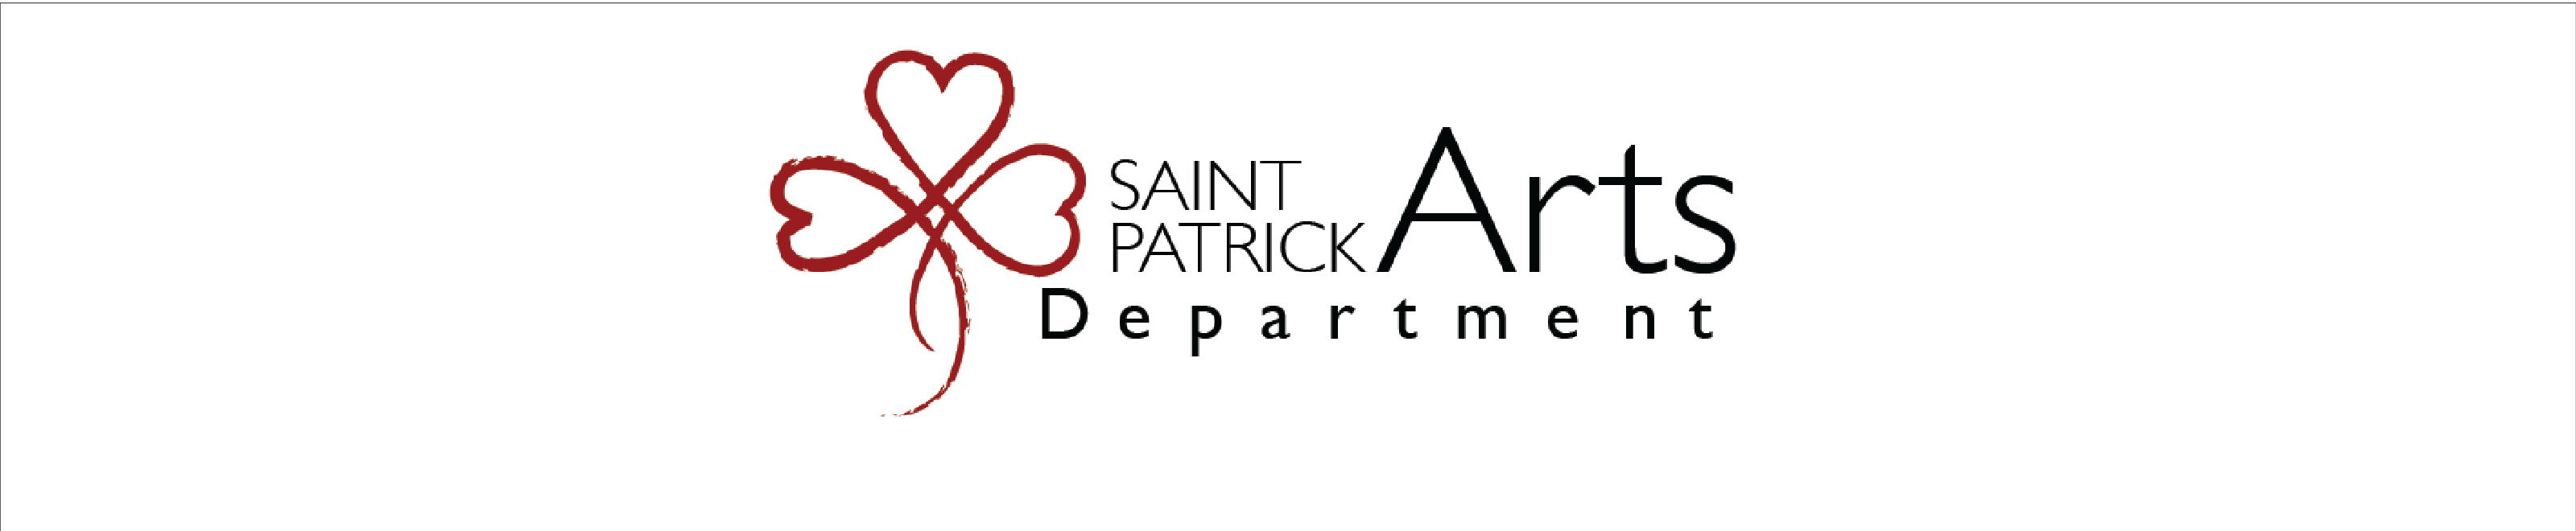 Saint Patrick Arts Department